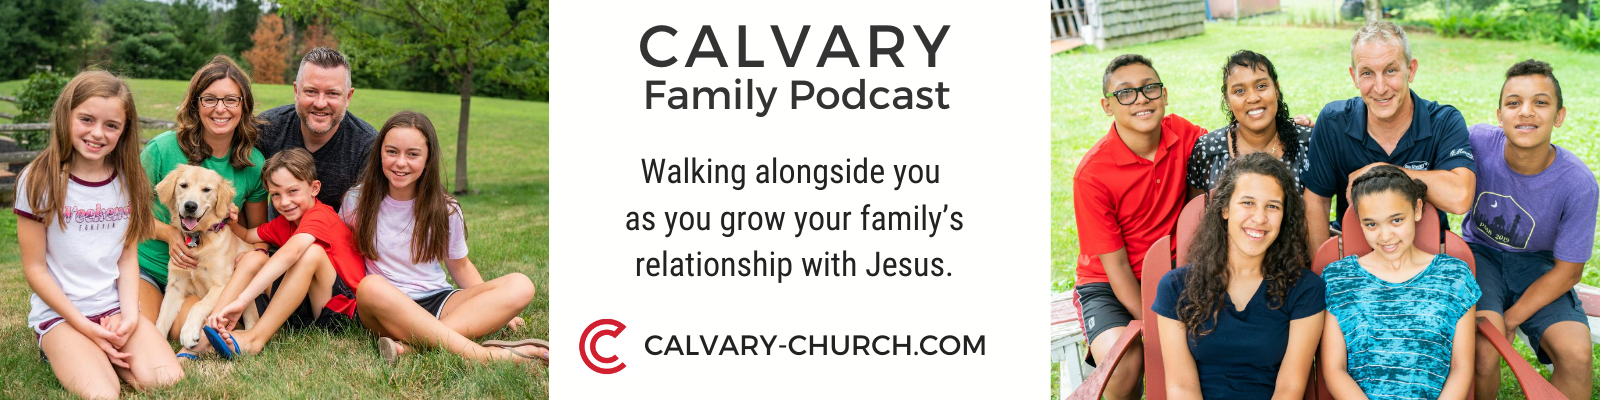 The Calvary Church Family Podcast